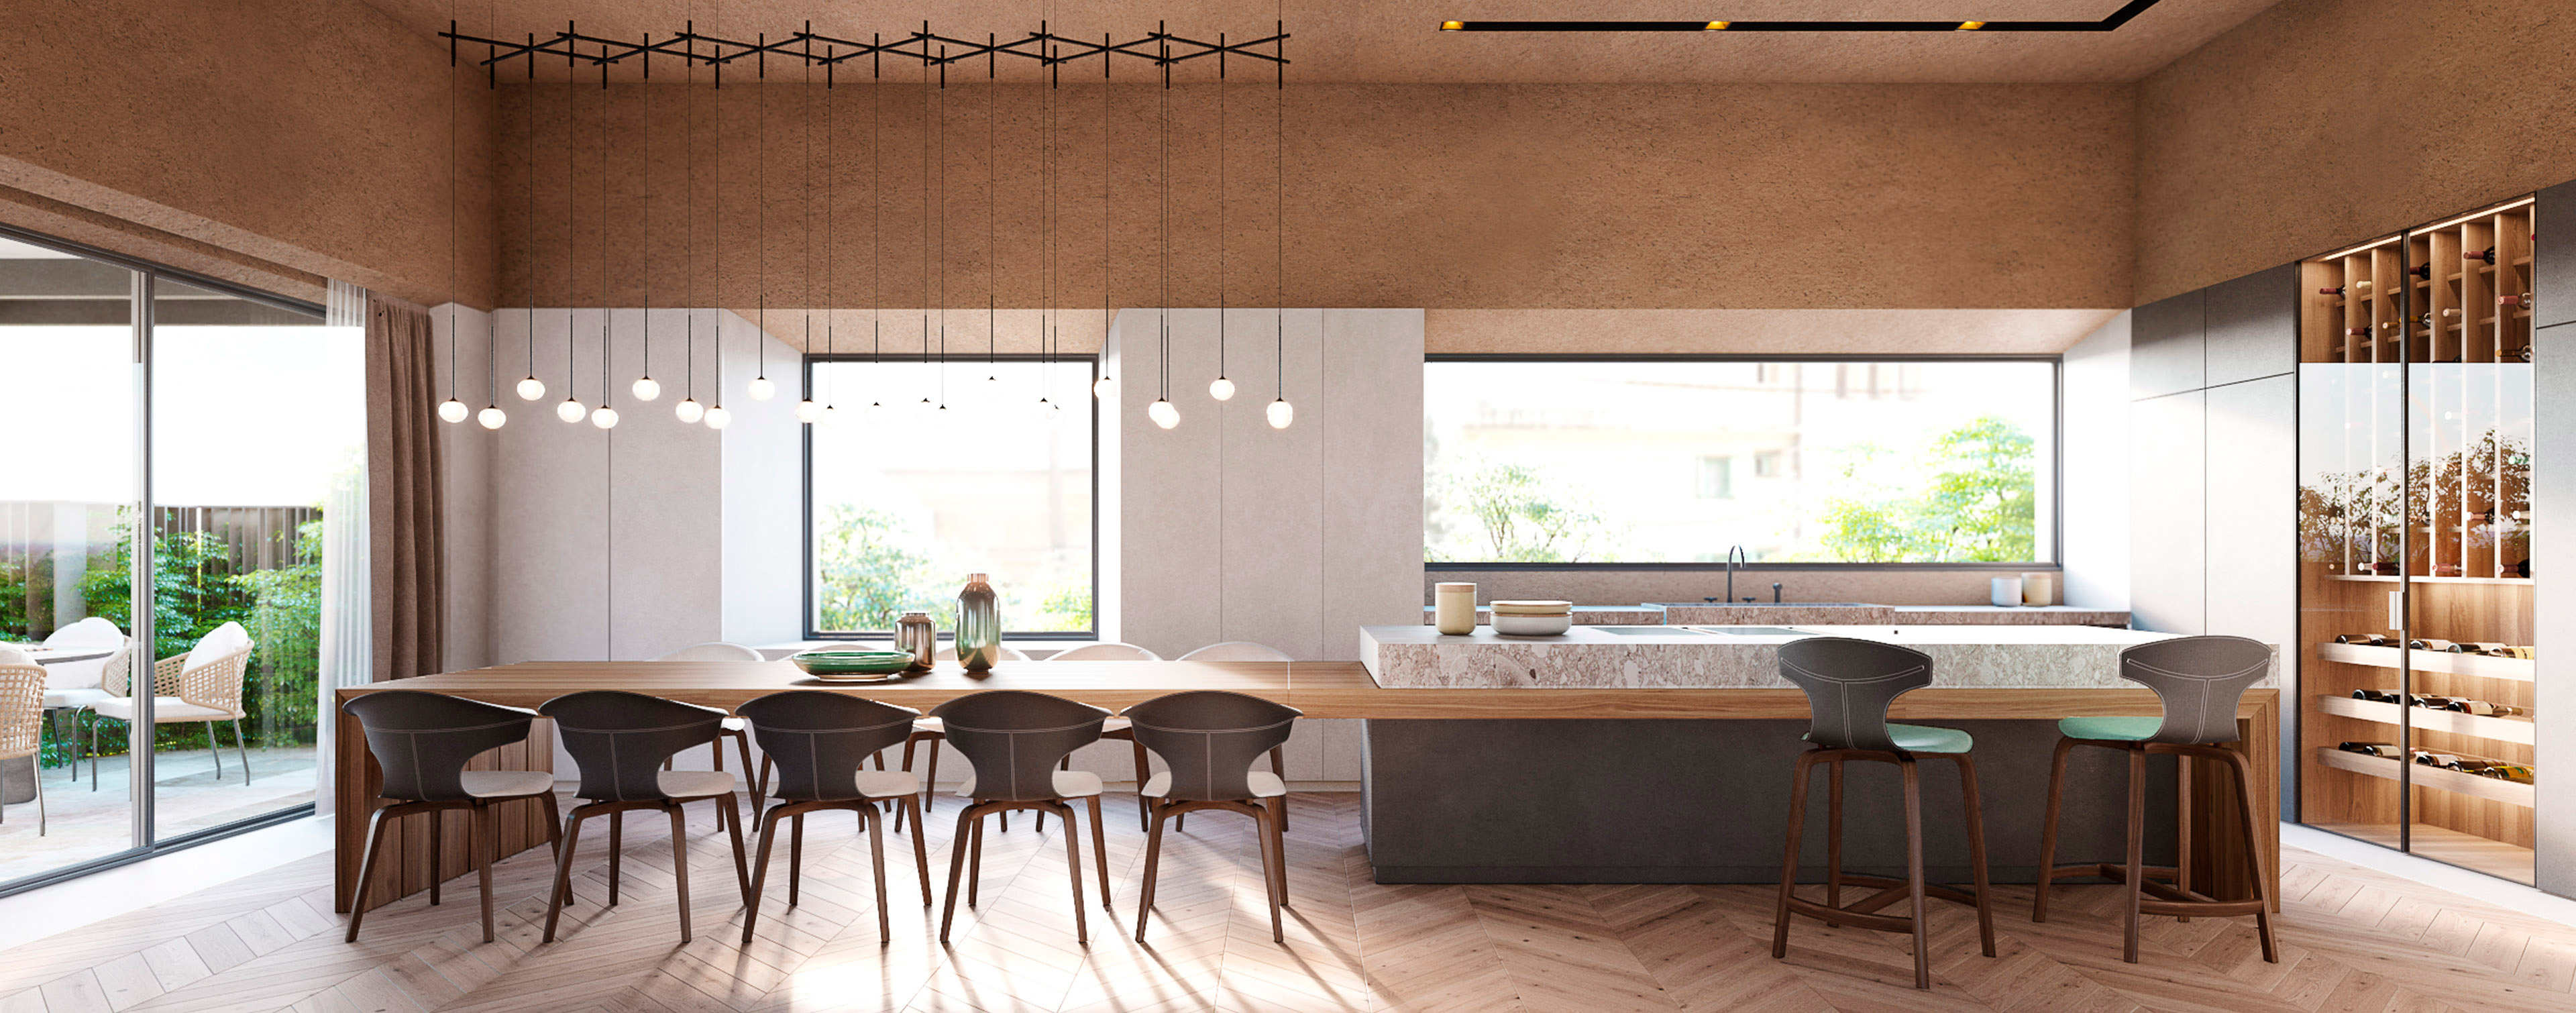 luv studio luxury architects barcelona pedralbes spc house IMG 01 - PEDRALBES SPC-HOUSE